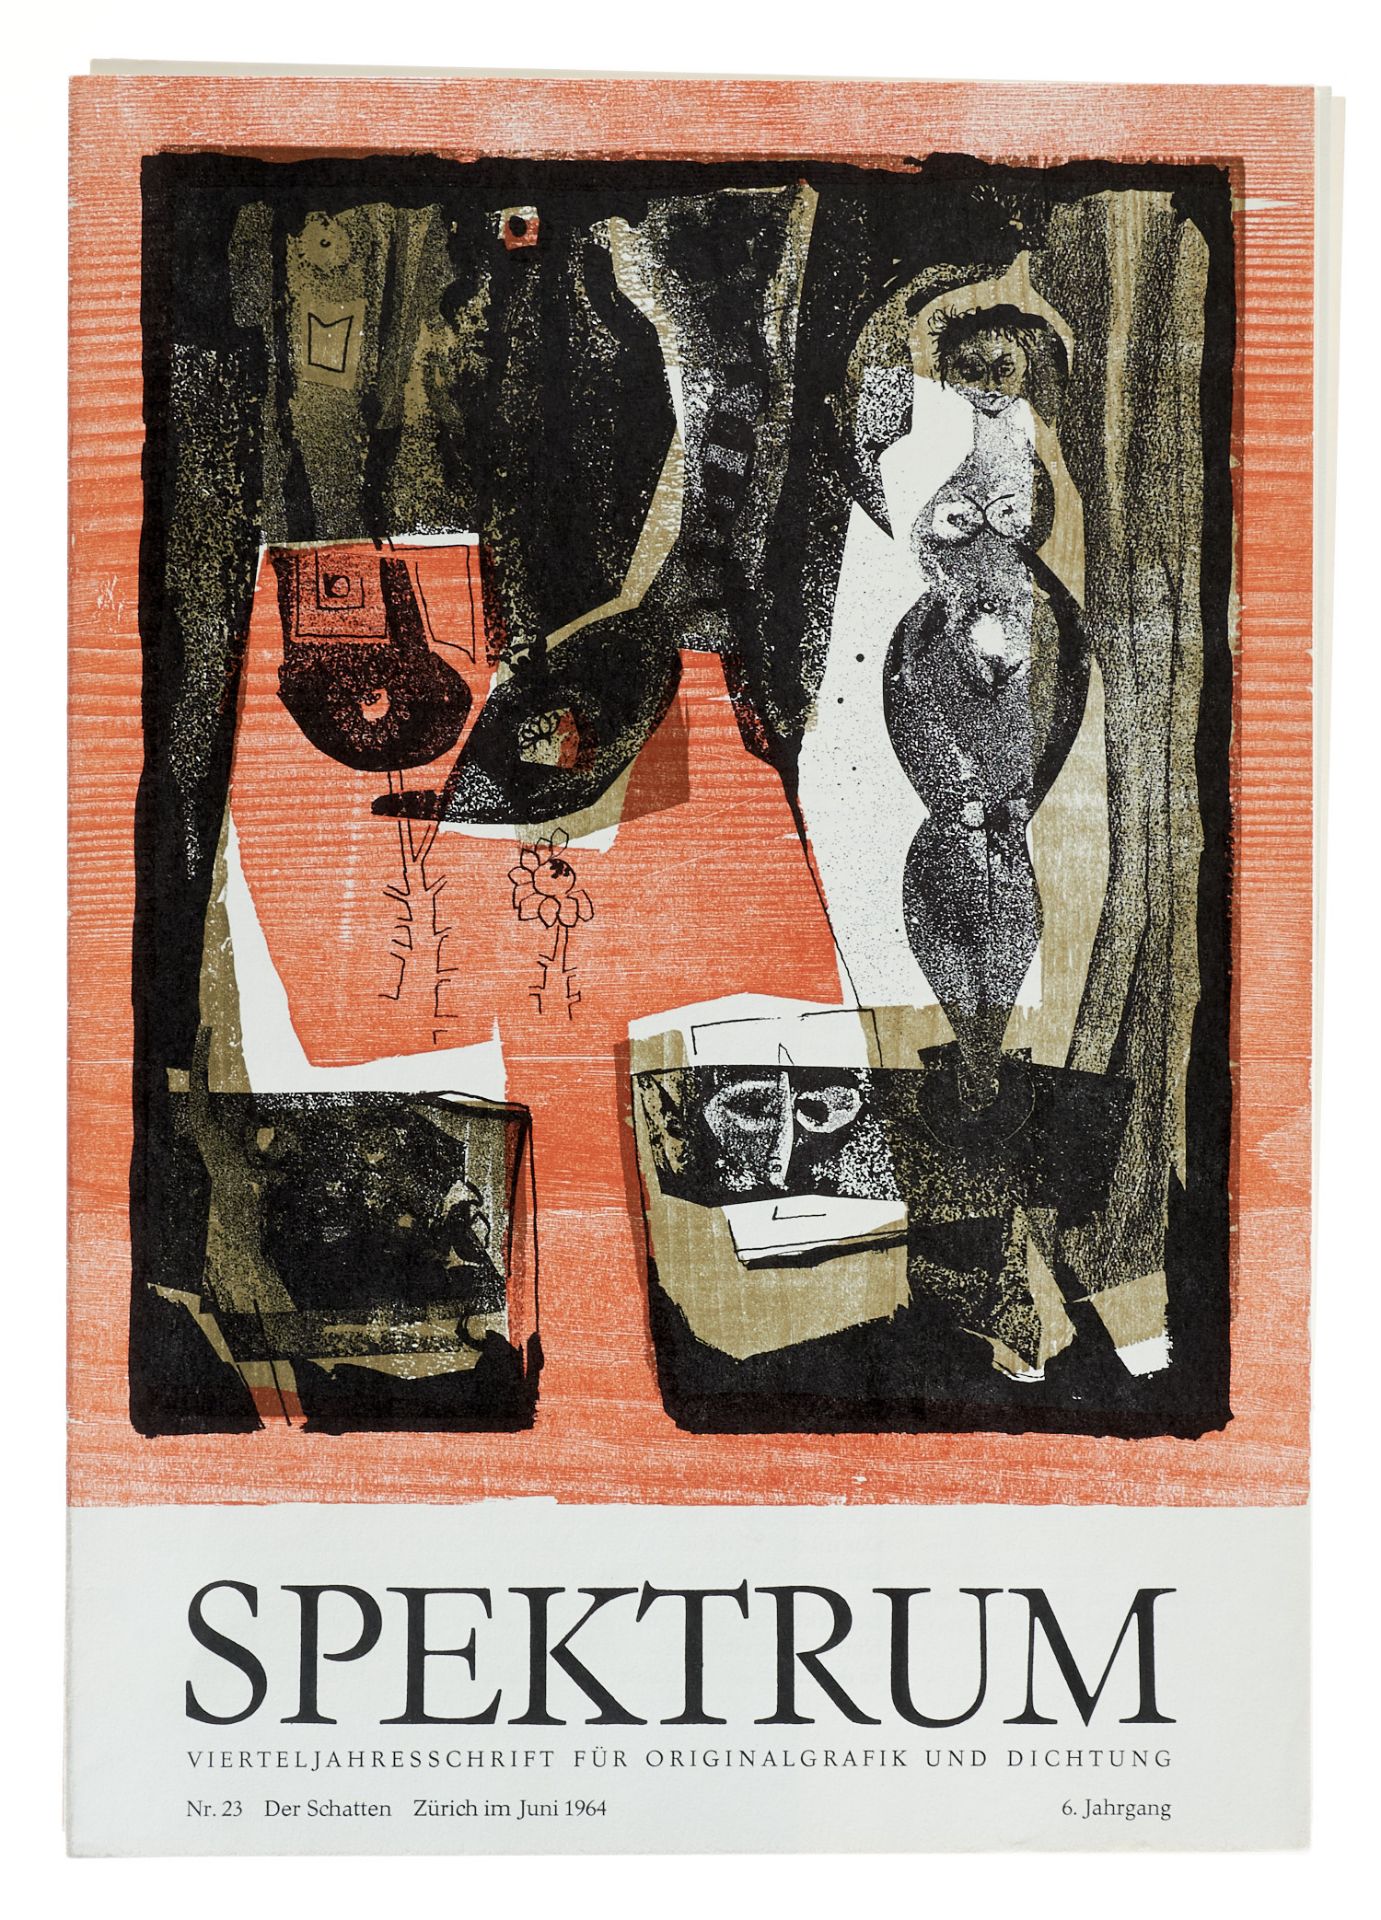 Spektrum. - Image 2 of 5